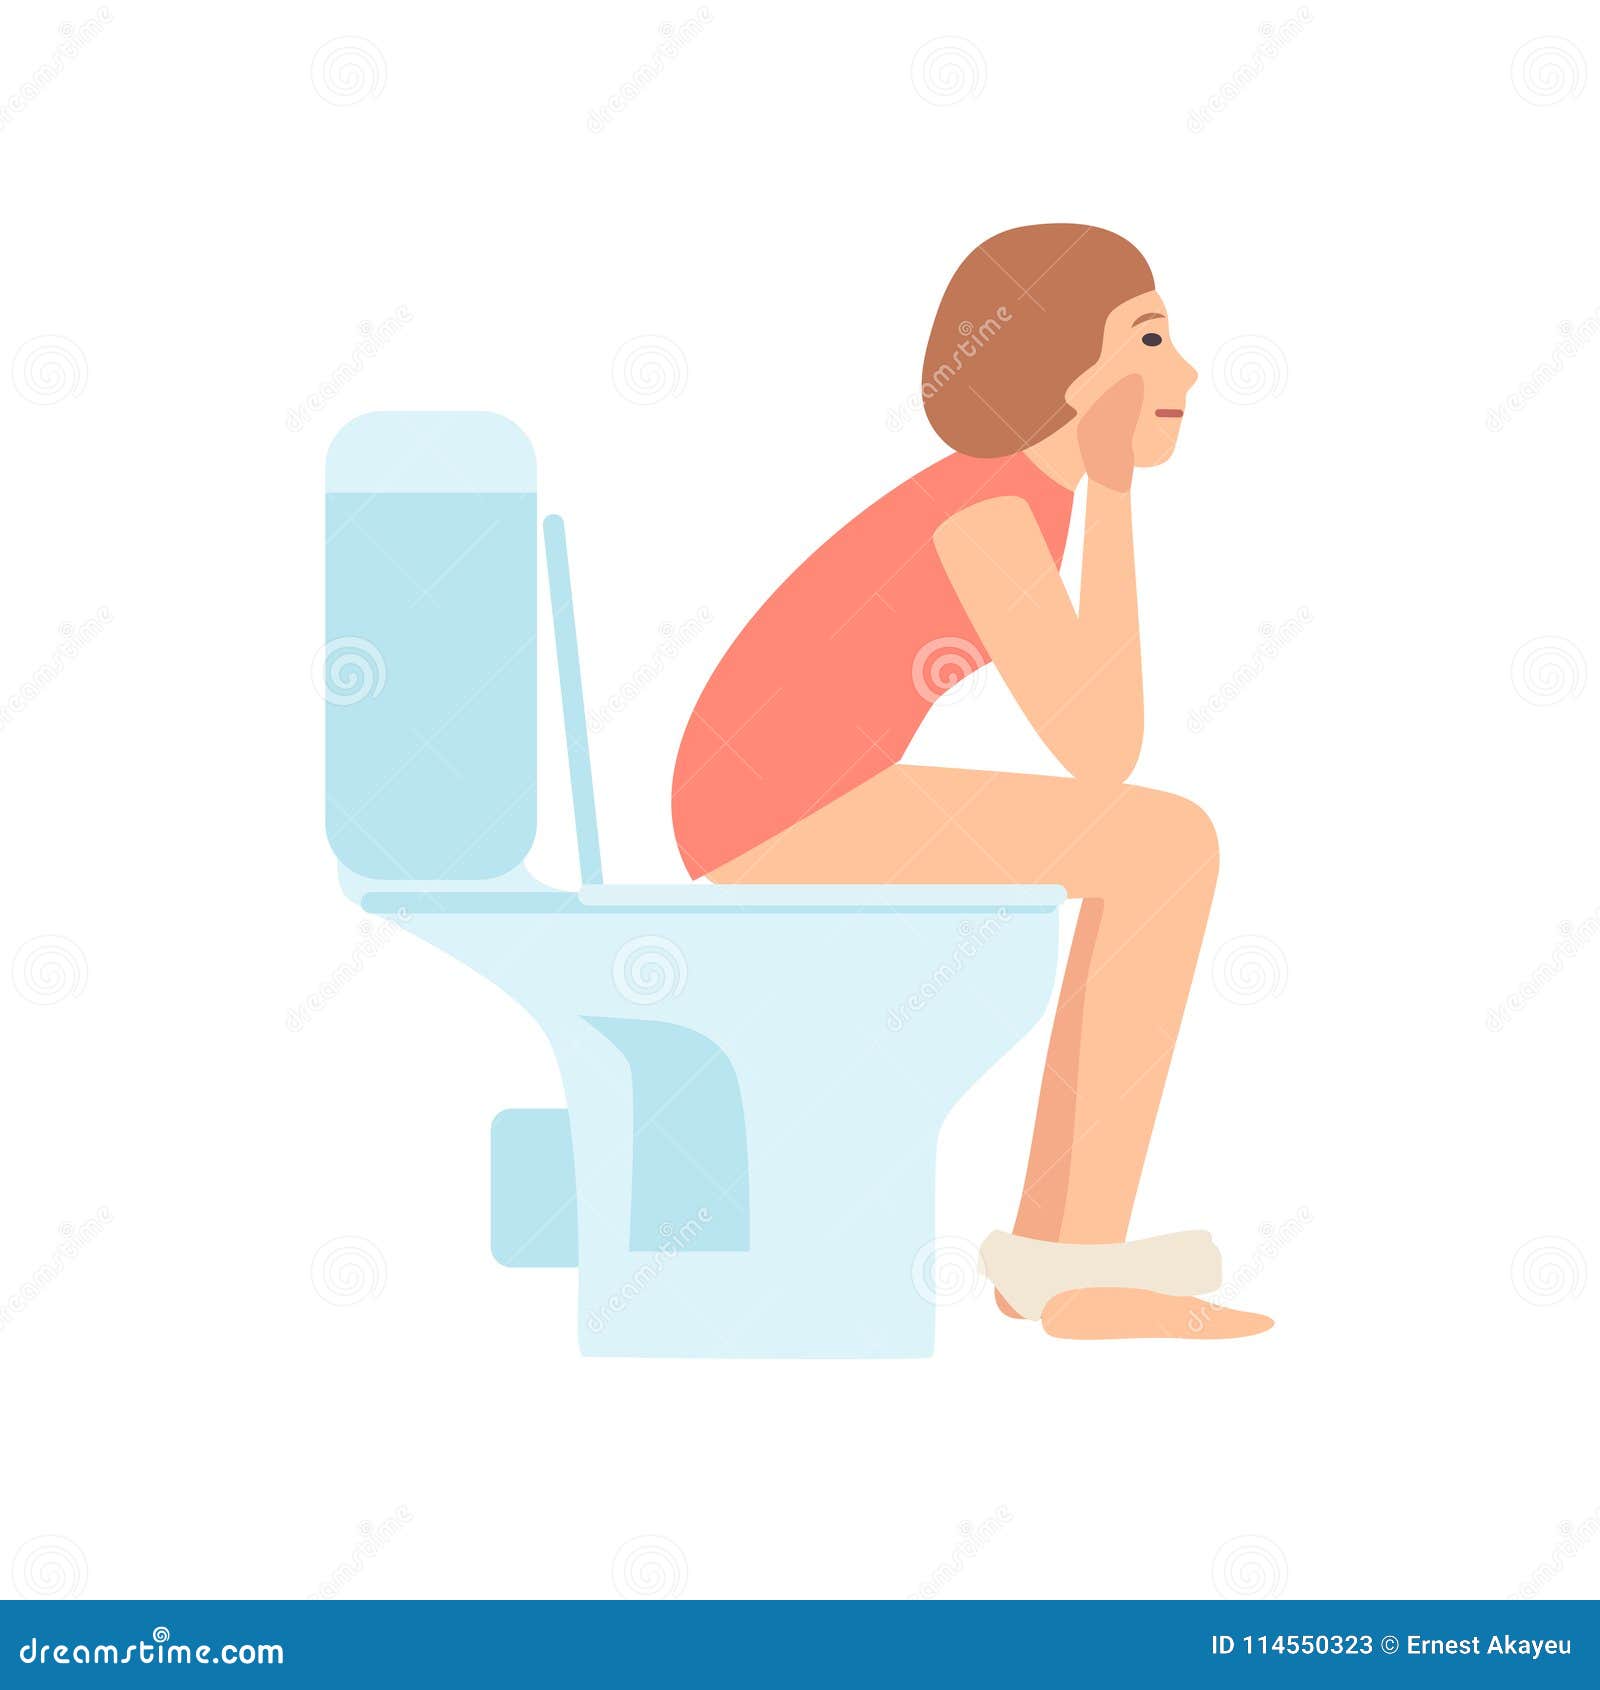 aderinola adegboyega recommends Women Shitting On Toilet